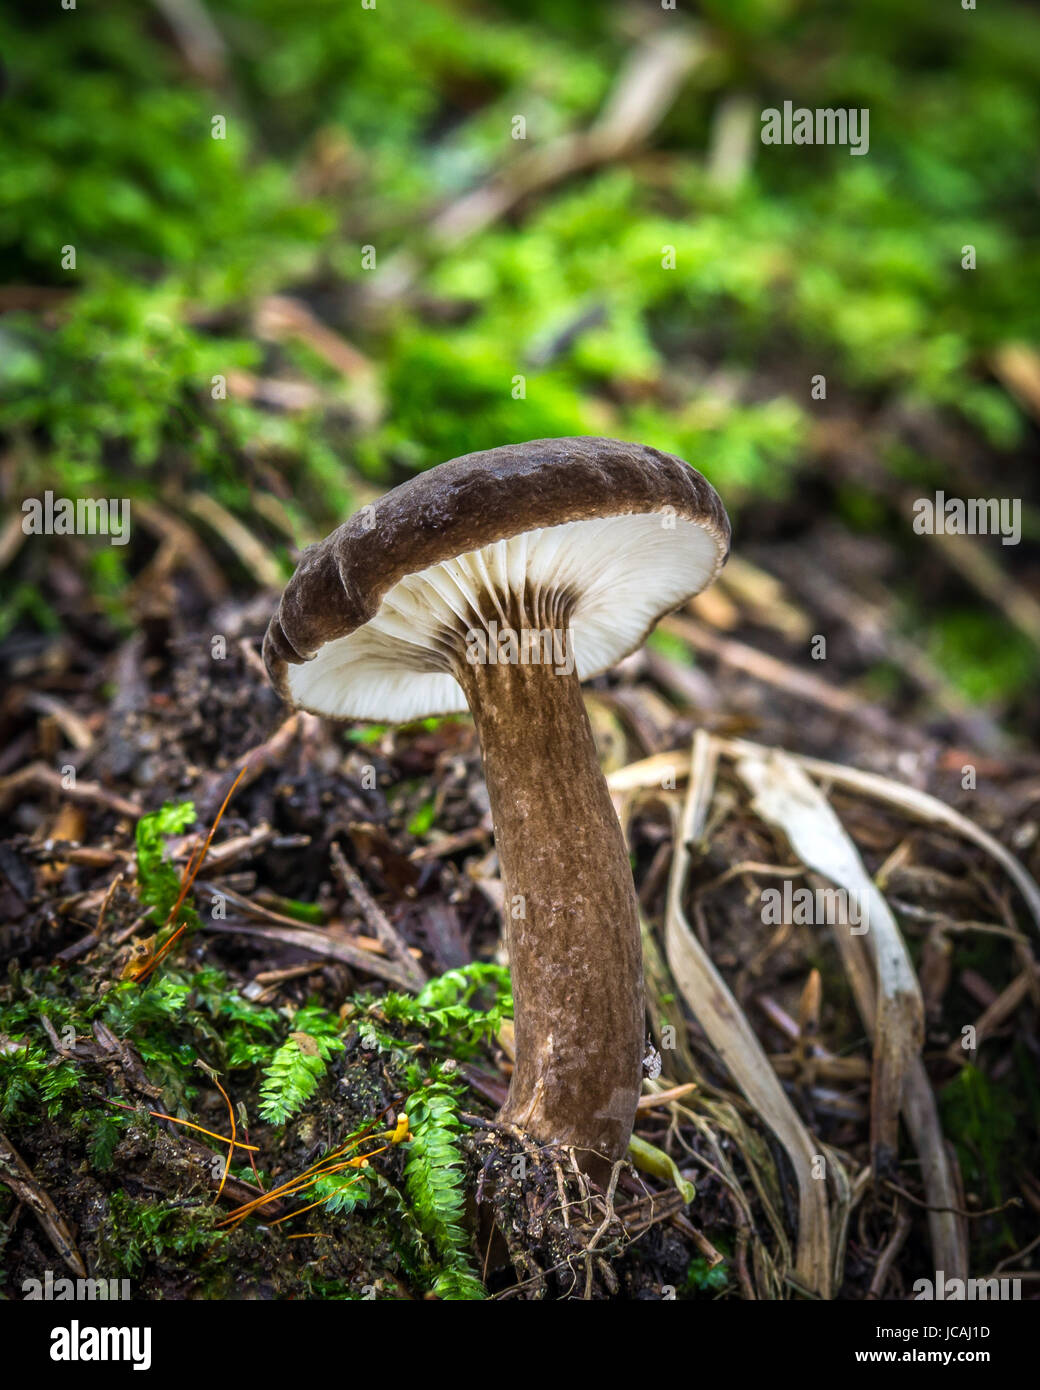 Edible mushrooms with excellent taste, Lactarius lignyotus Stock Photo